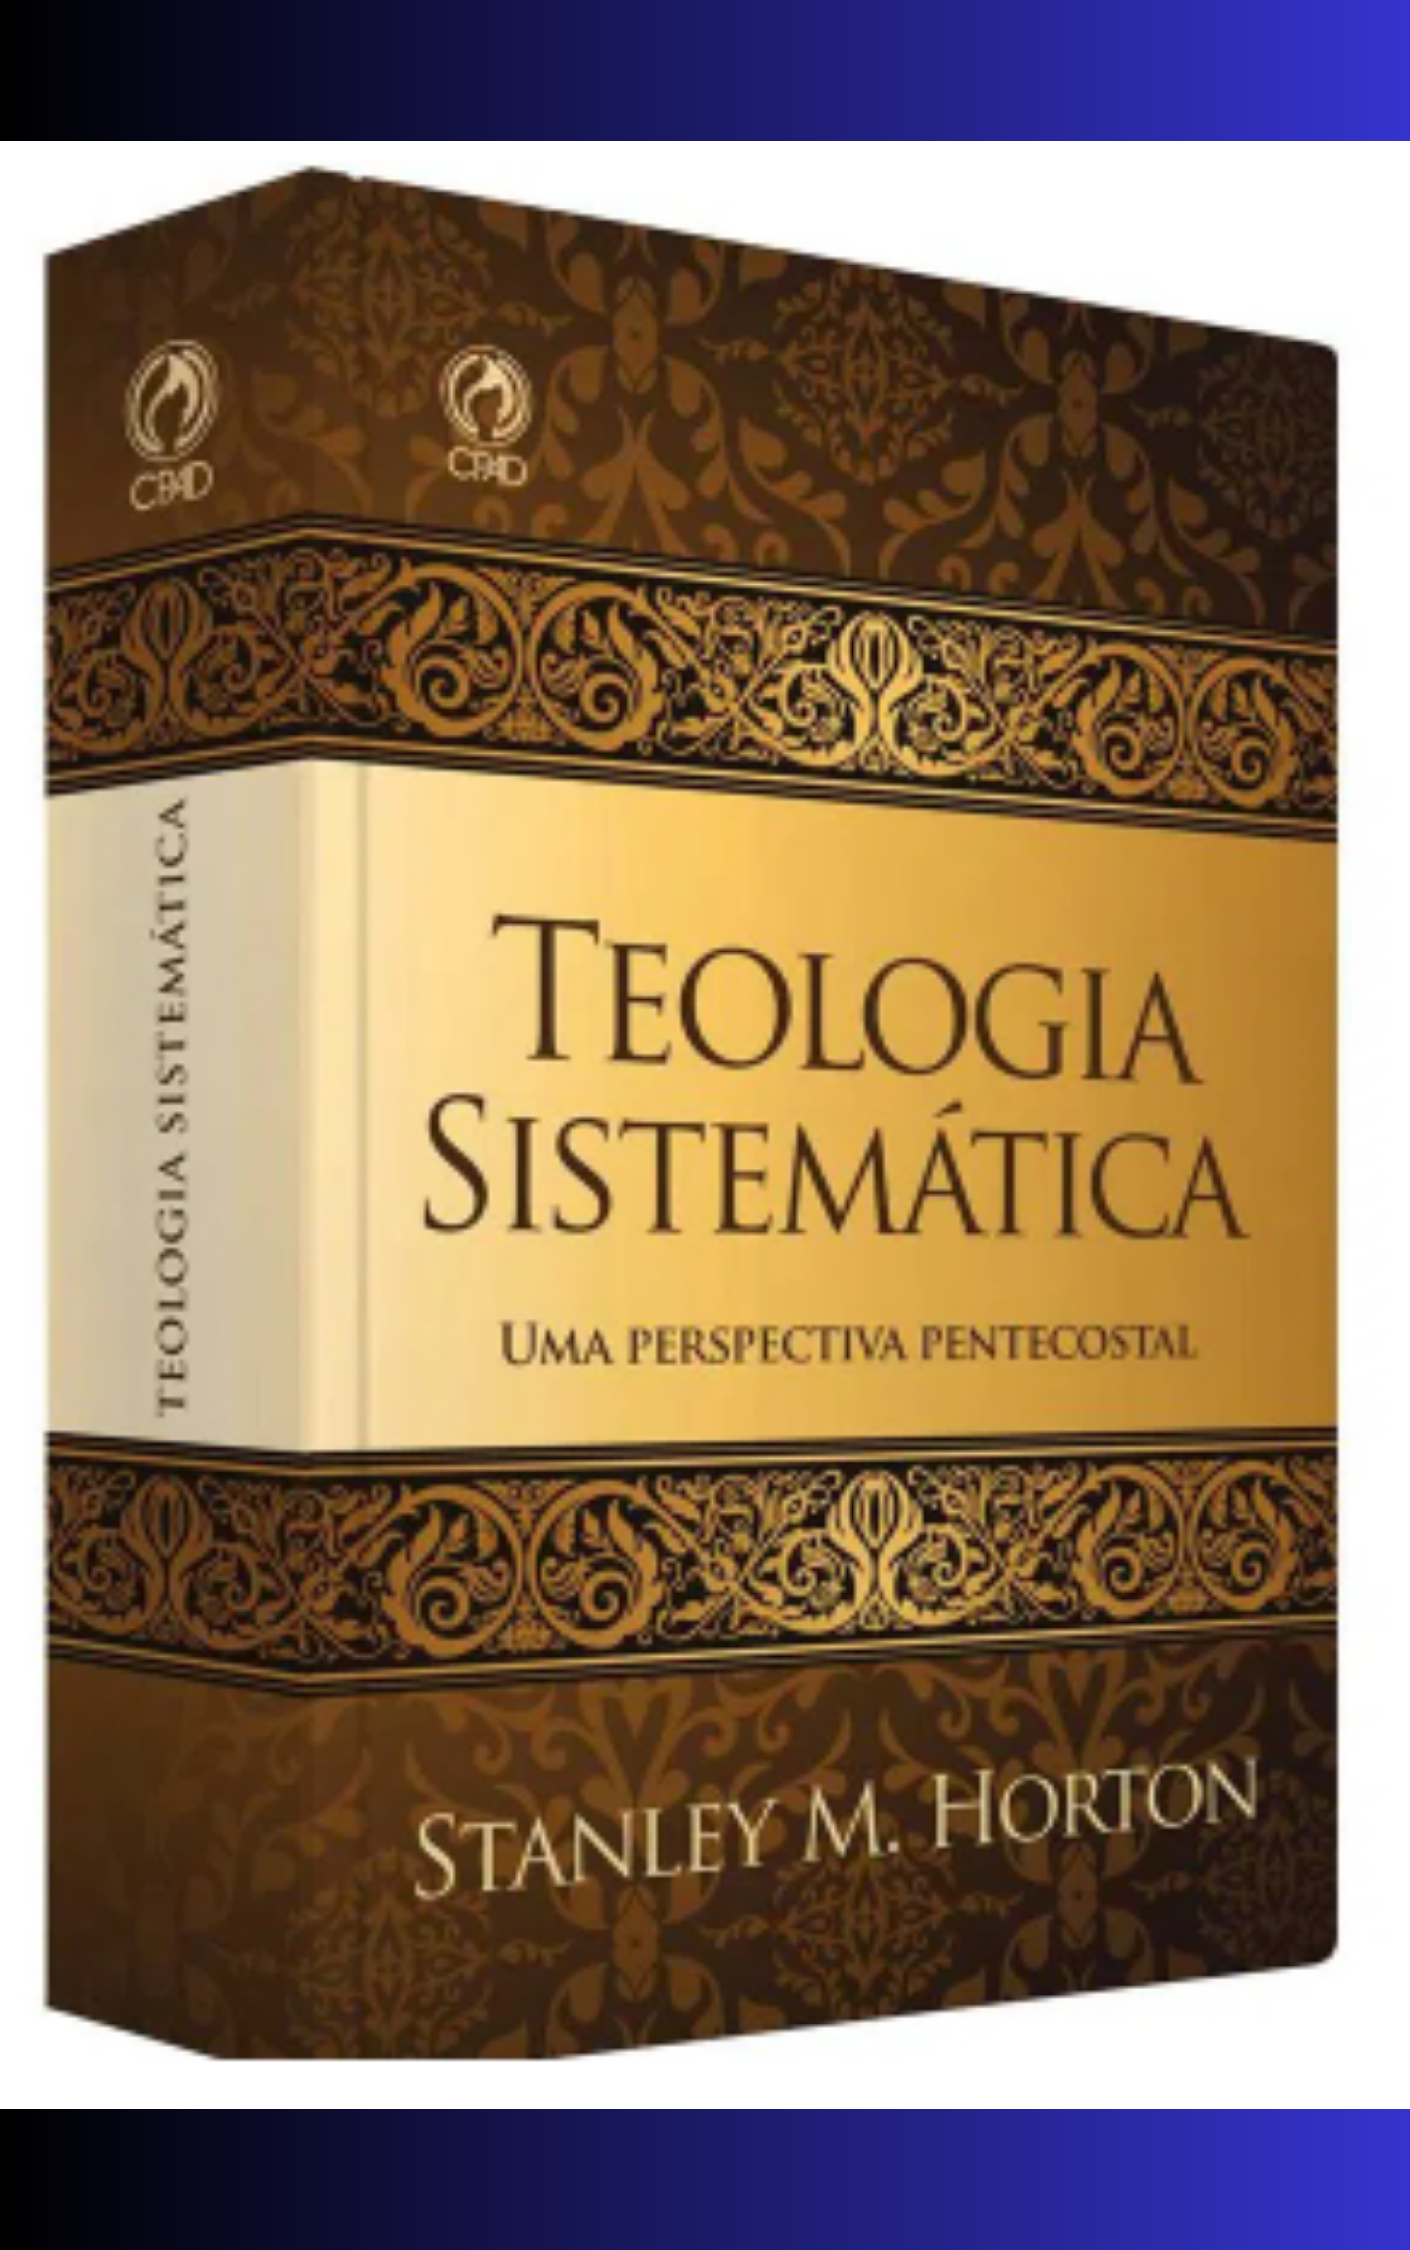 PPT - CFM - Teologia da Igreja de Nova Vida - Prof. Martinho